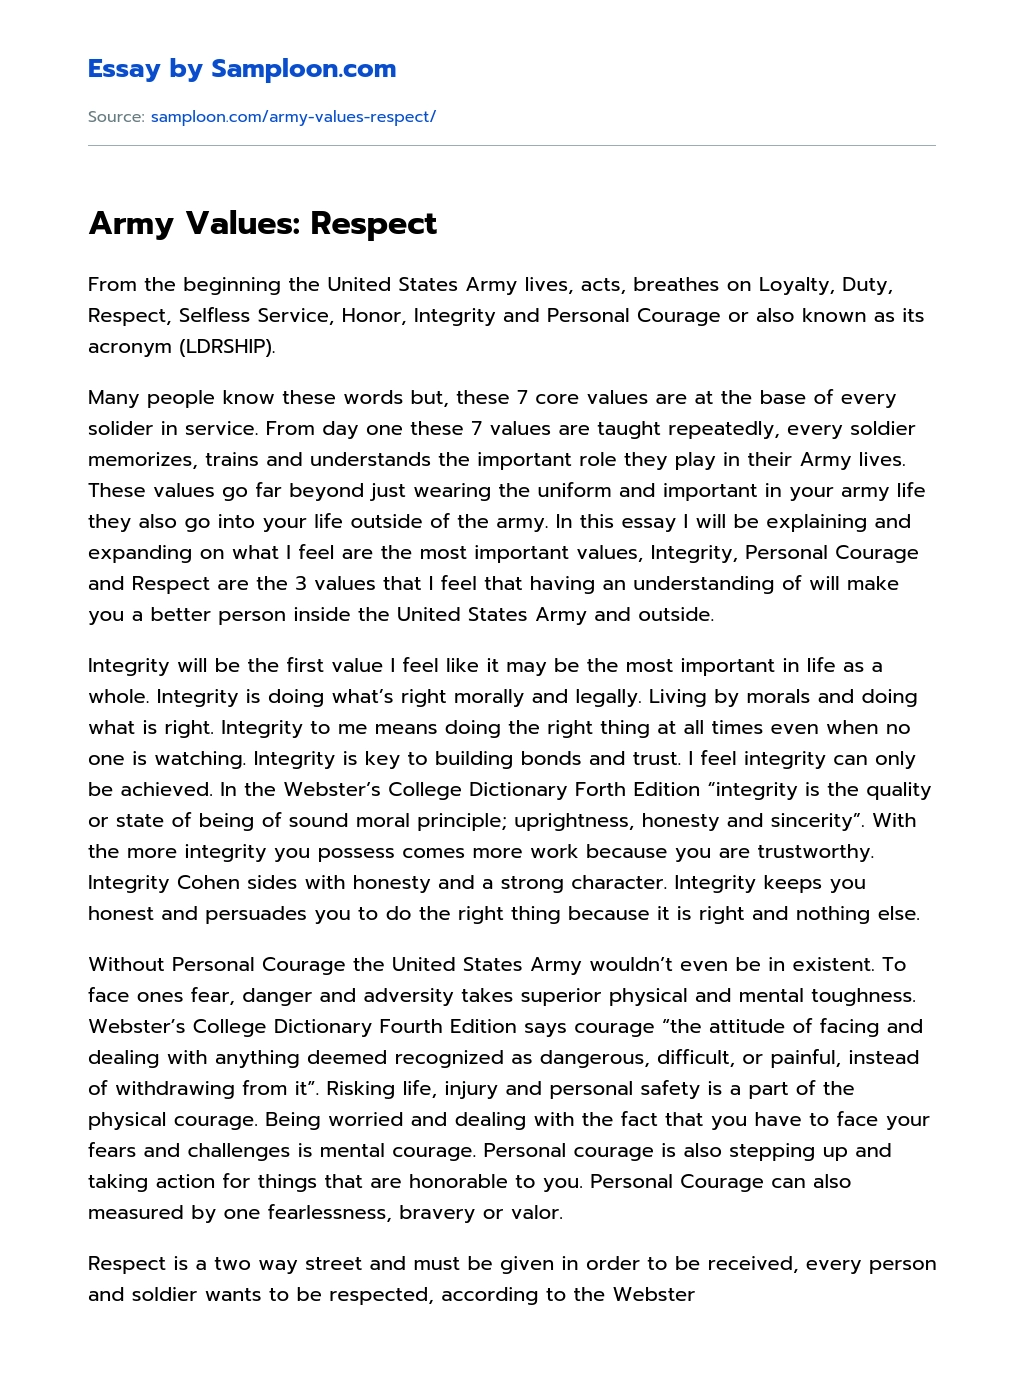 Army Values: Respect essay